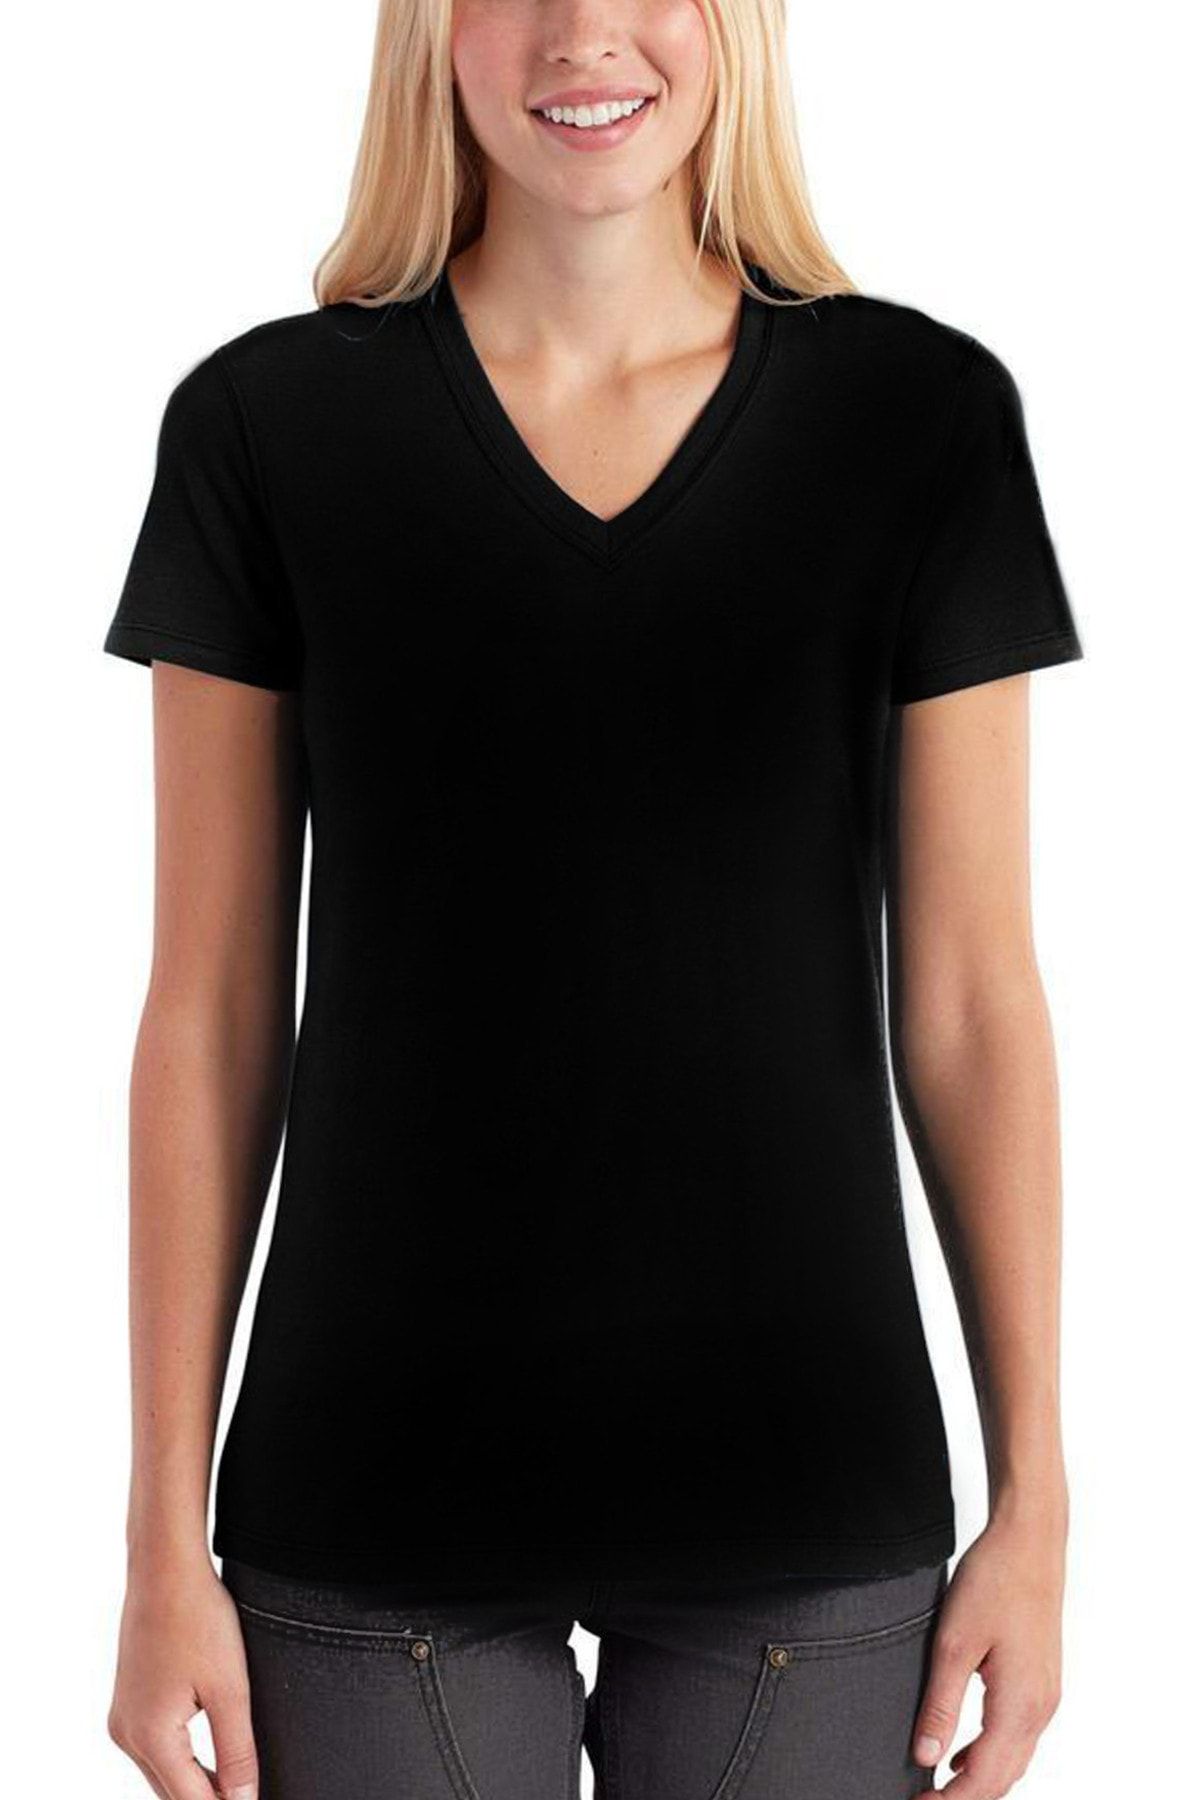 ROCKANDROLL Düz, Baskısız Basic Siyah V Yaka Kısa Kollu Kadın T-shirt